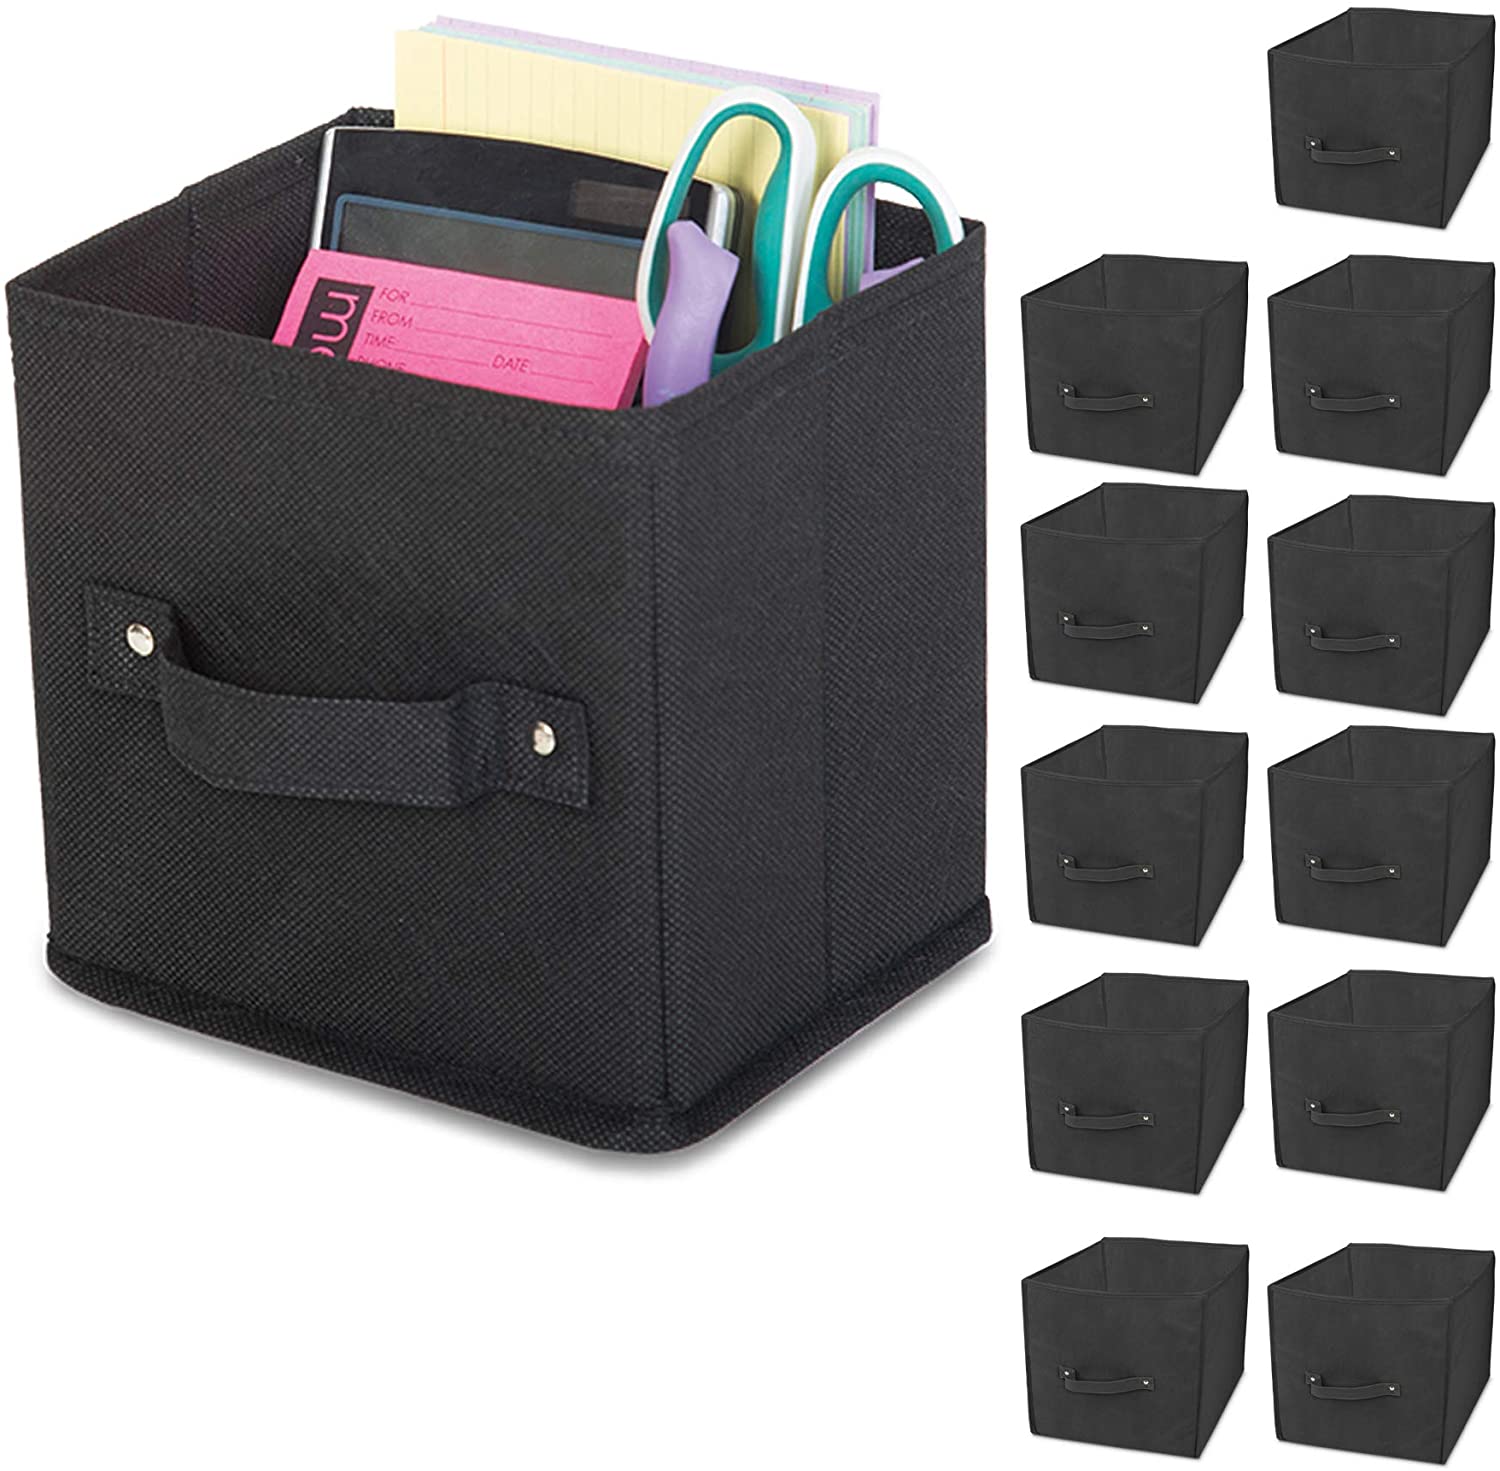 Mini Cube Organizer - 5.75 x 7 x 7 Inch - Black - Smart Design® 4